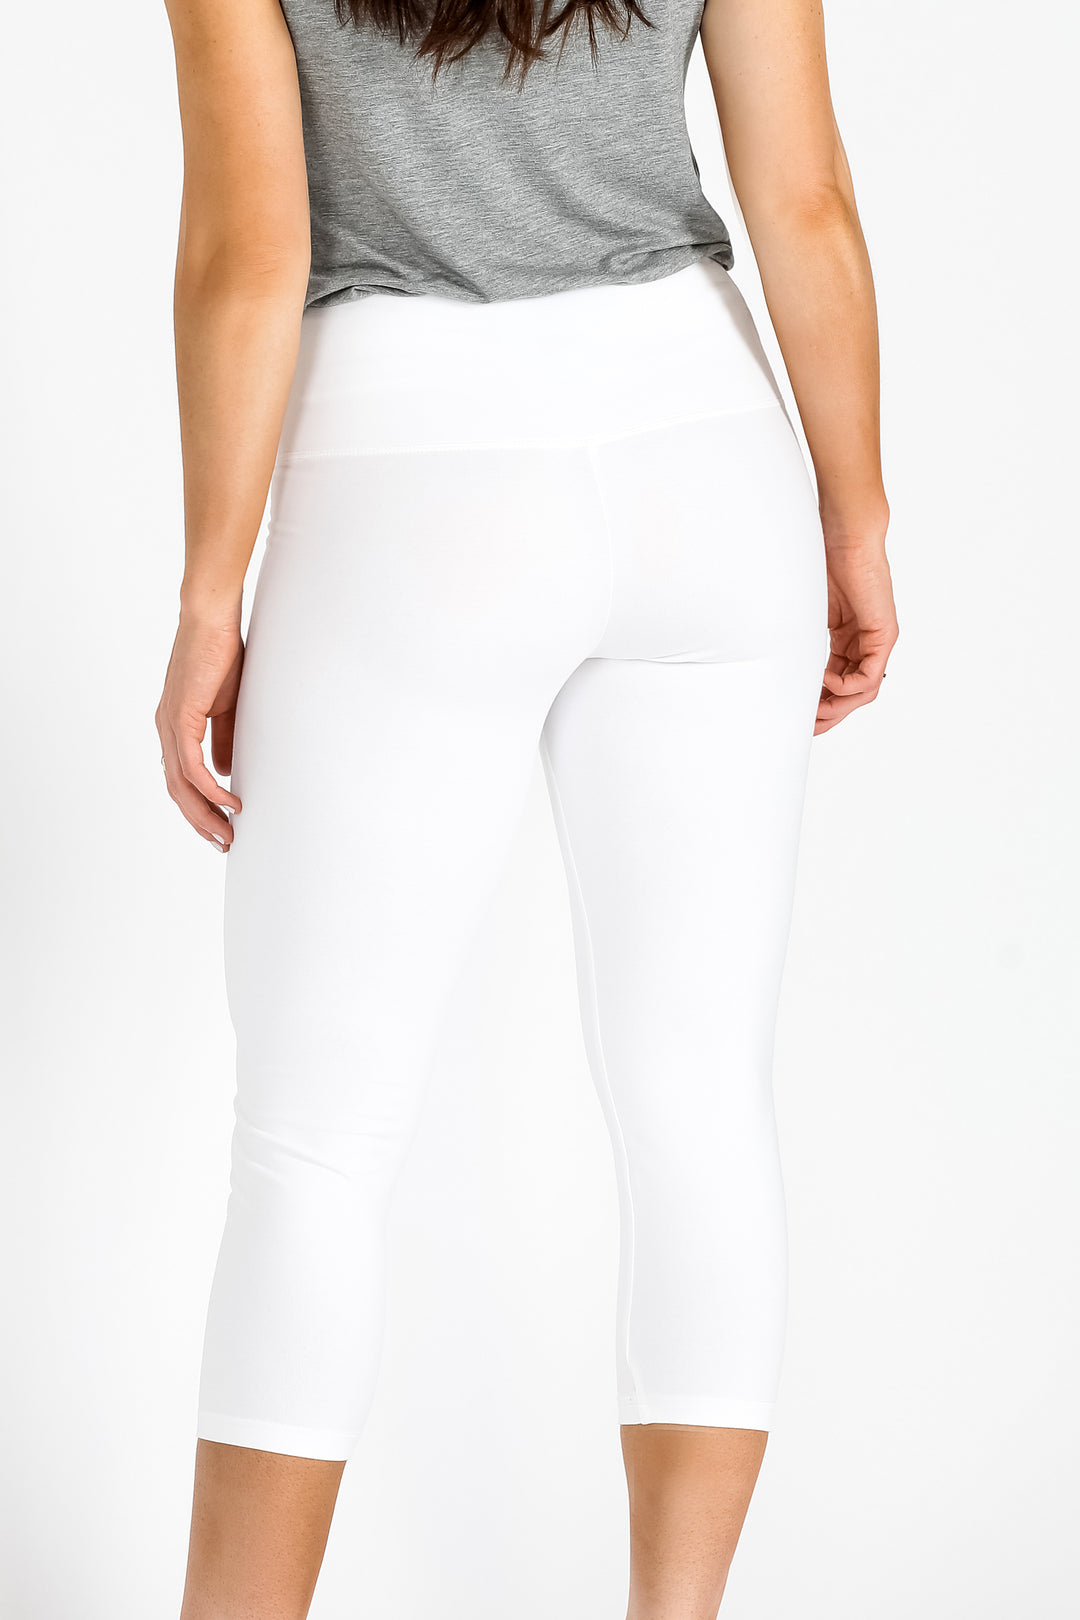 Intro Love the Fit Capri Leggings Women's Plus Size 3X White NWT